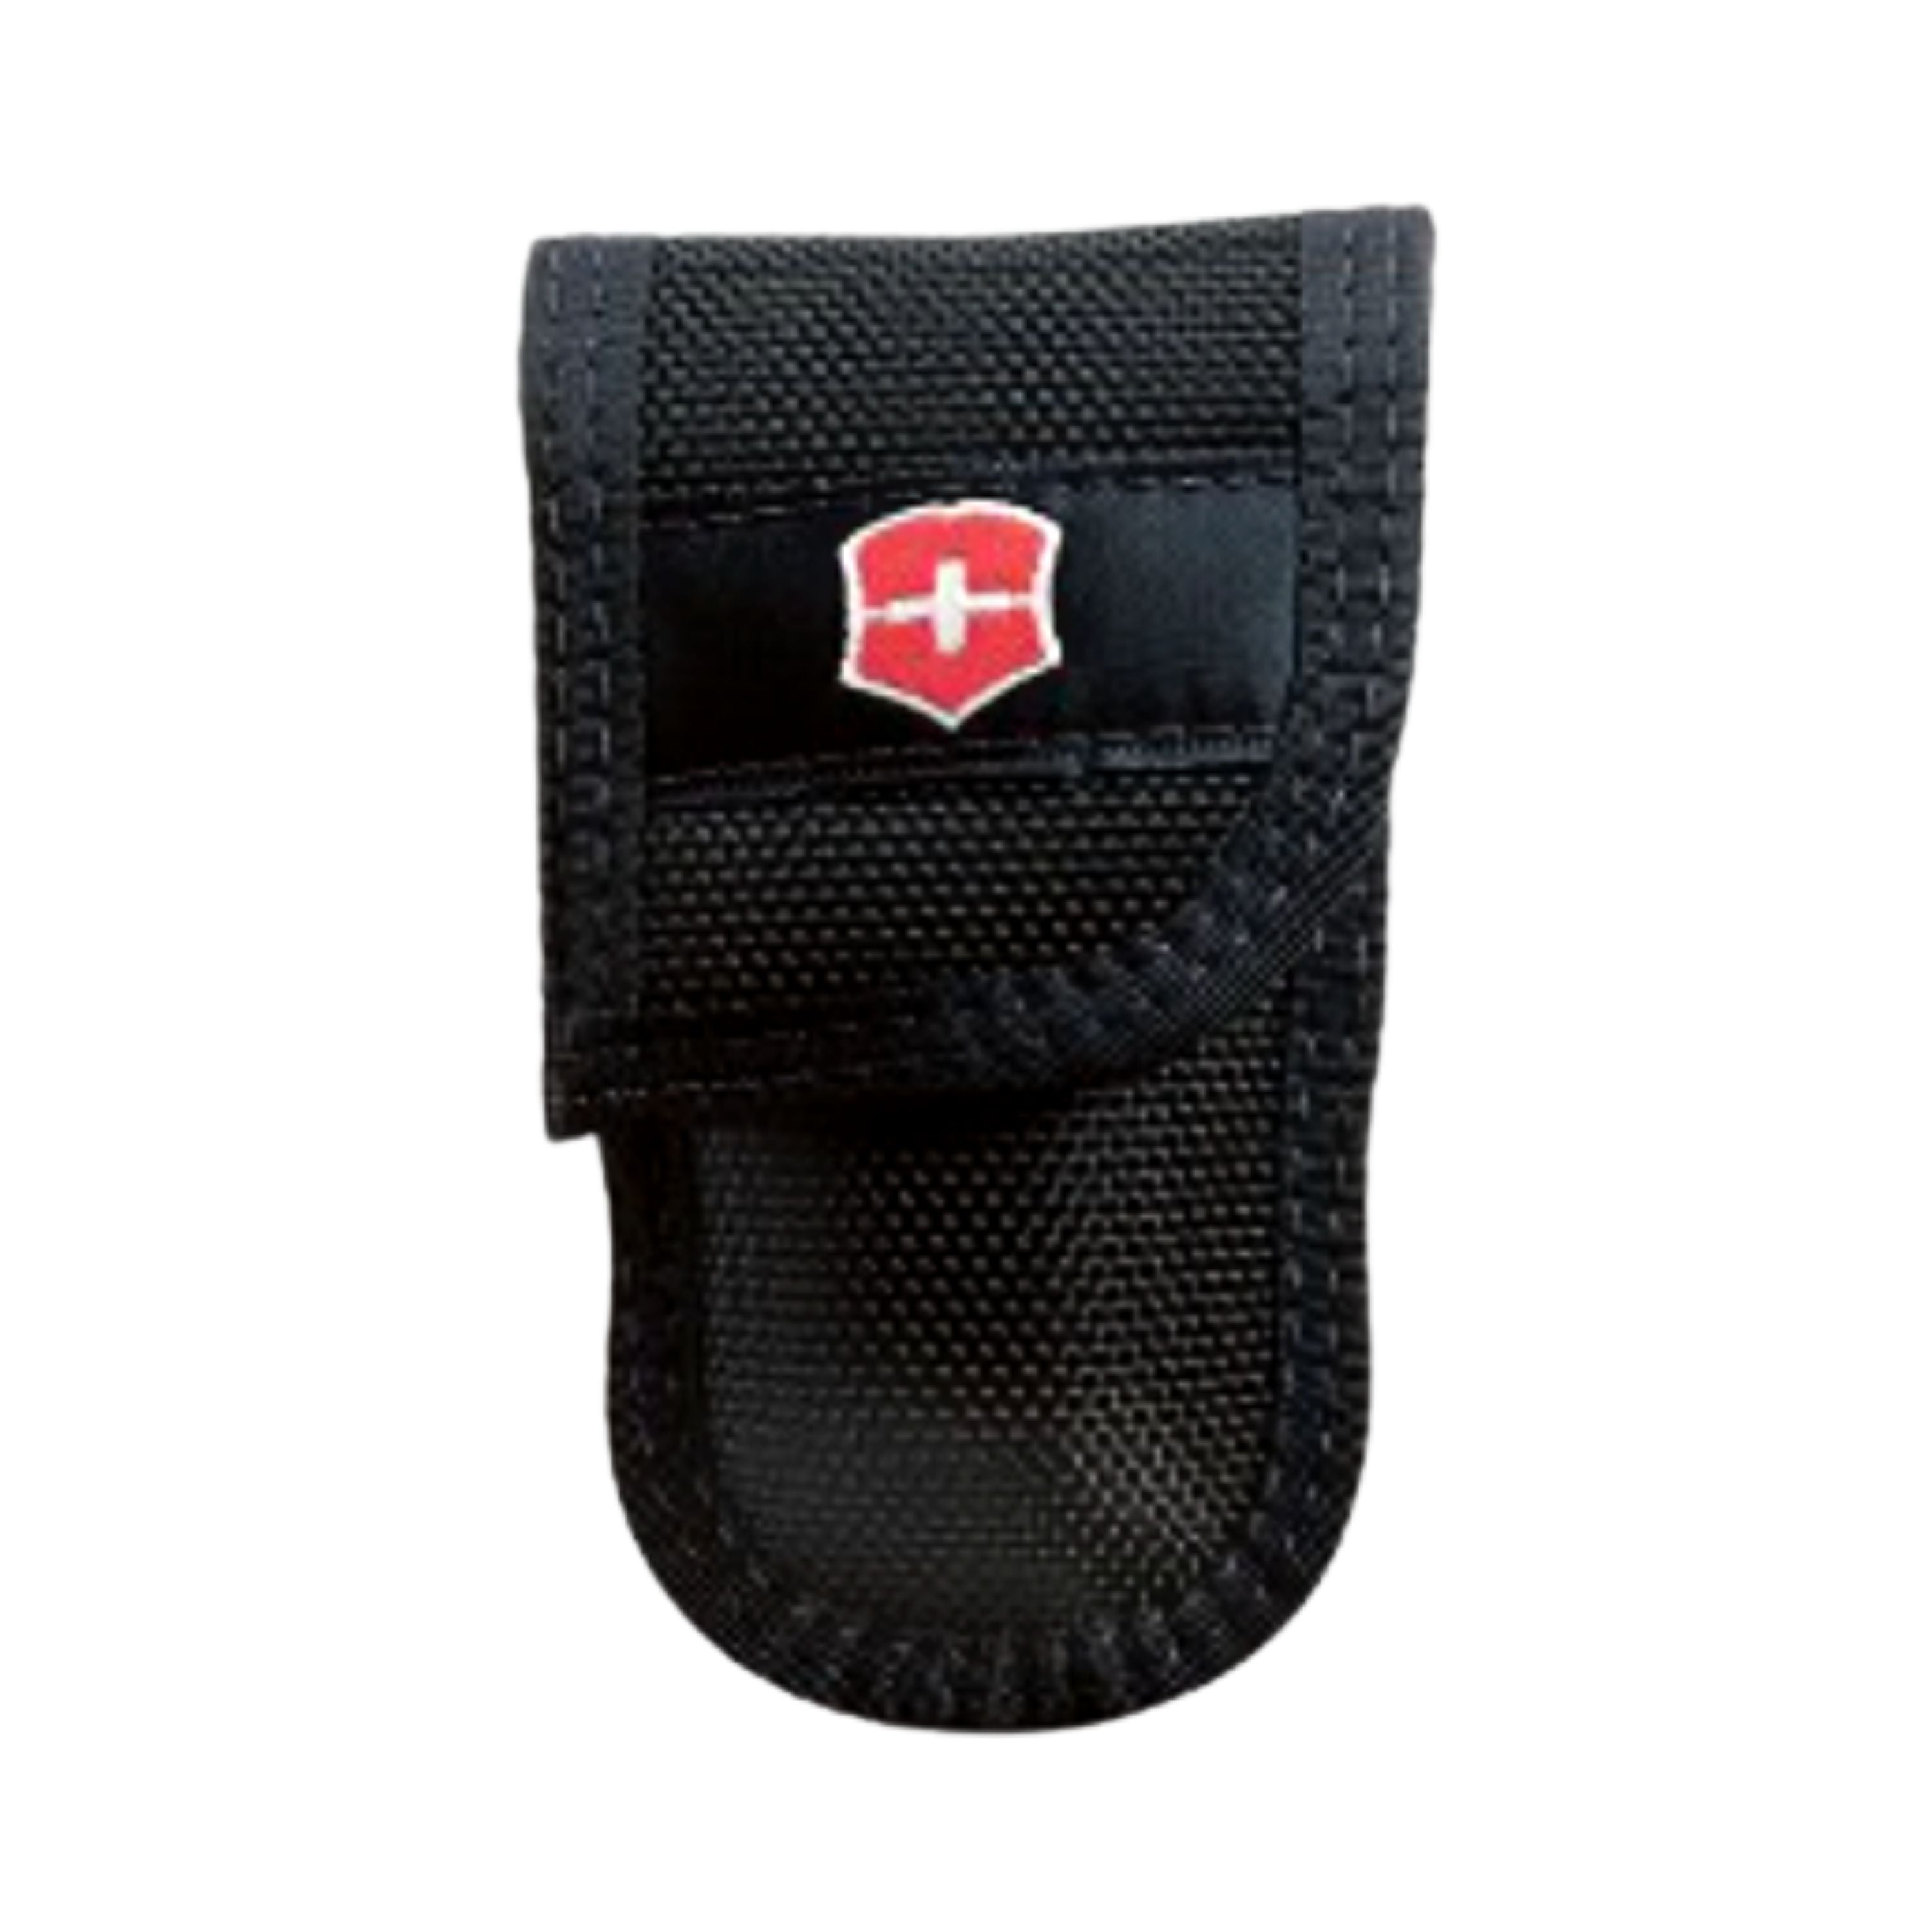 "Swiss Army" knife belt pouch